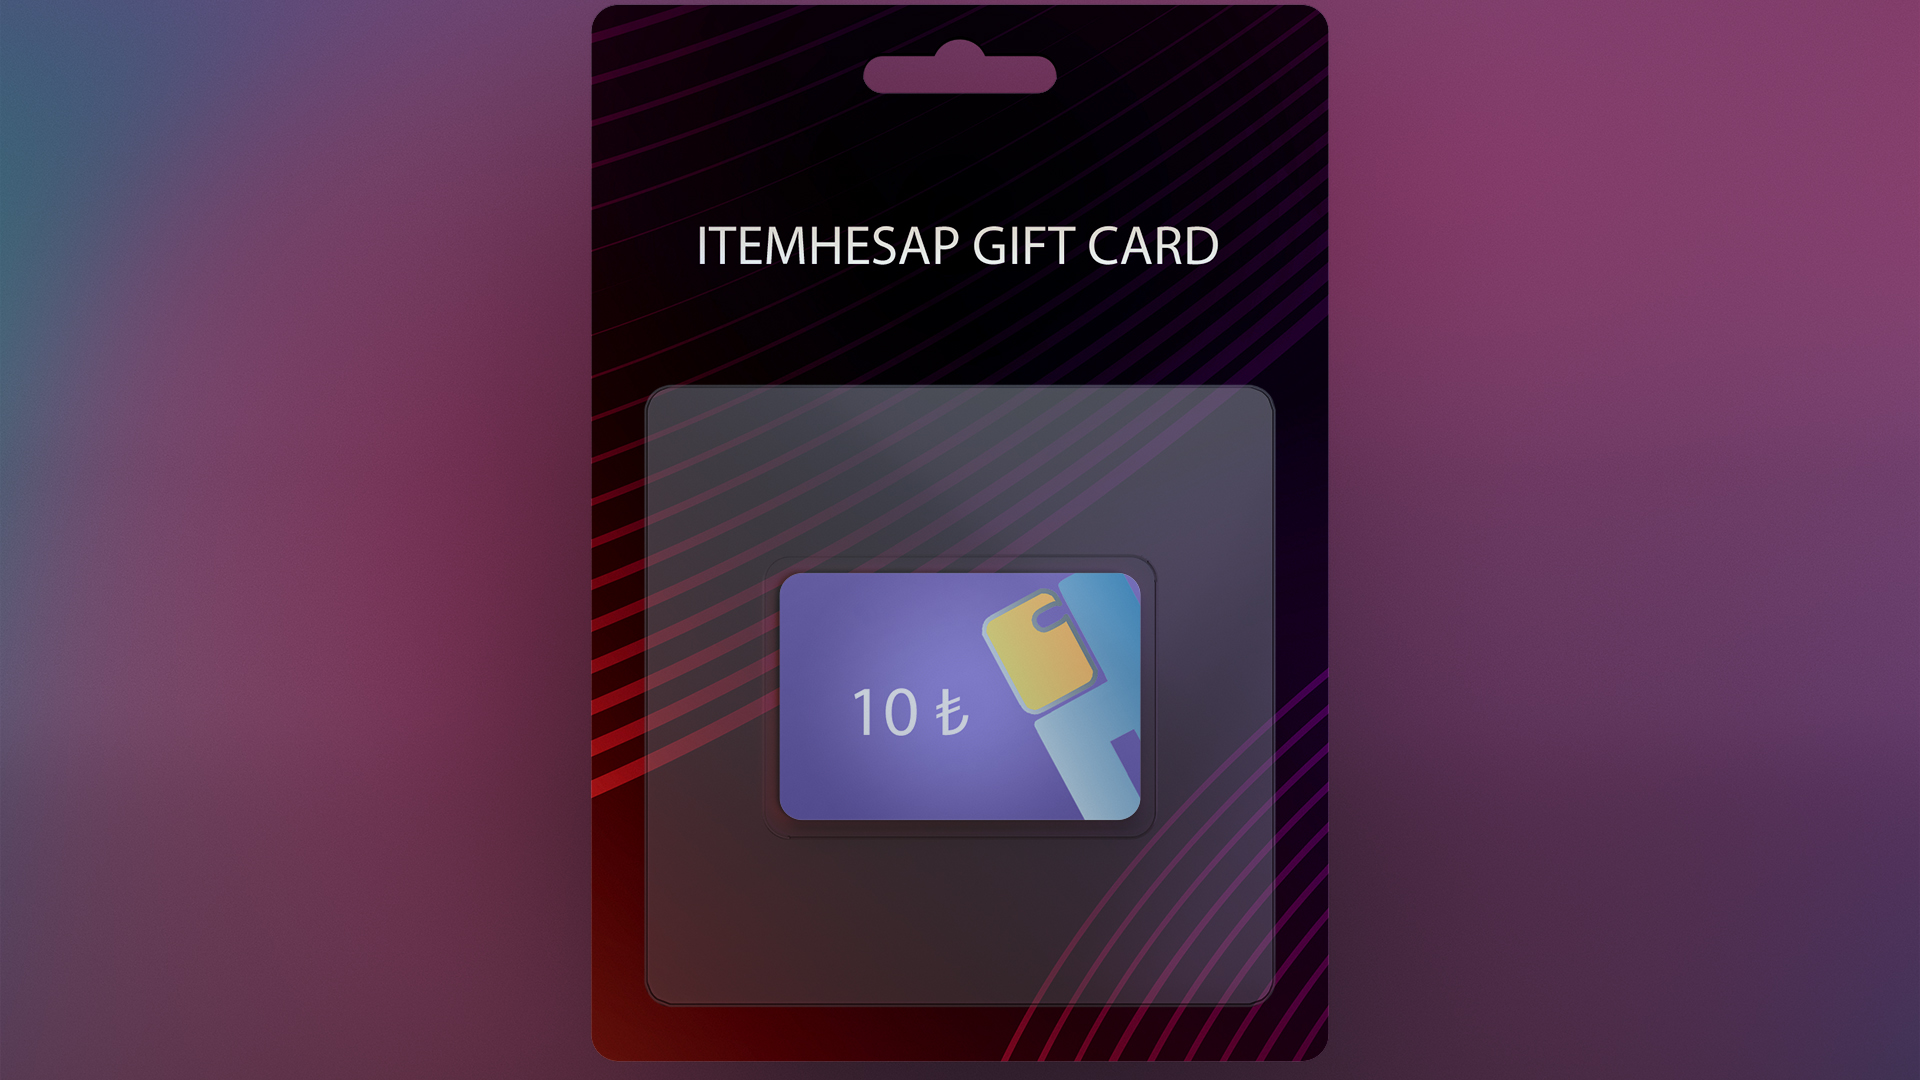 ItemHesap ₺10 Gift Card $1.14